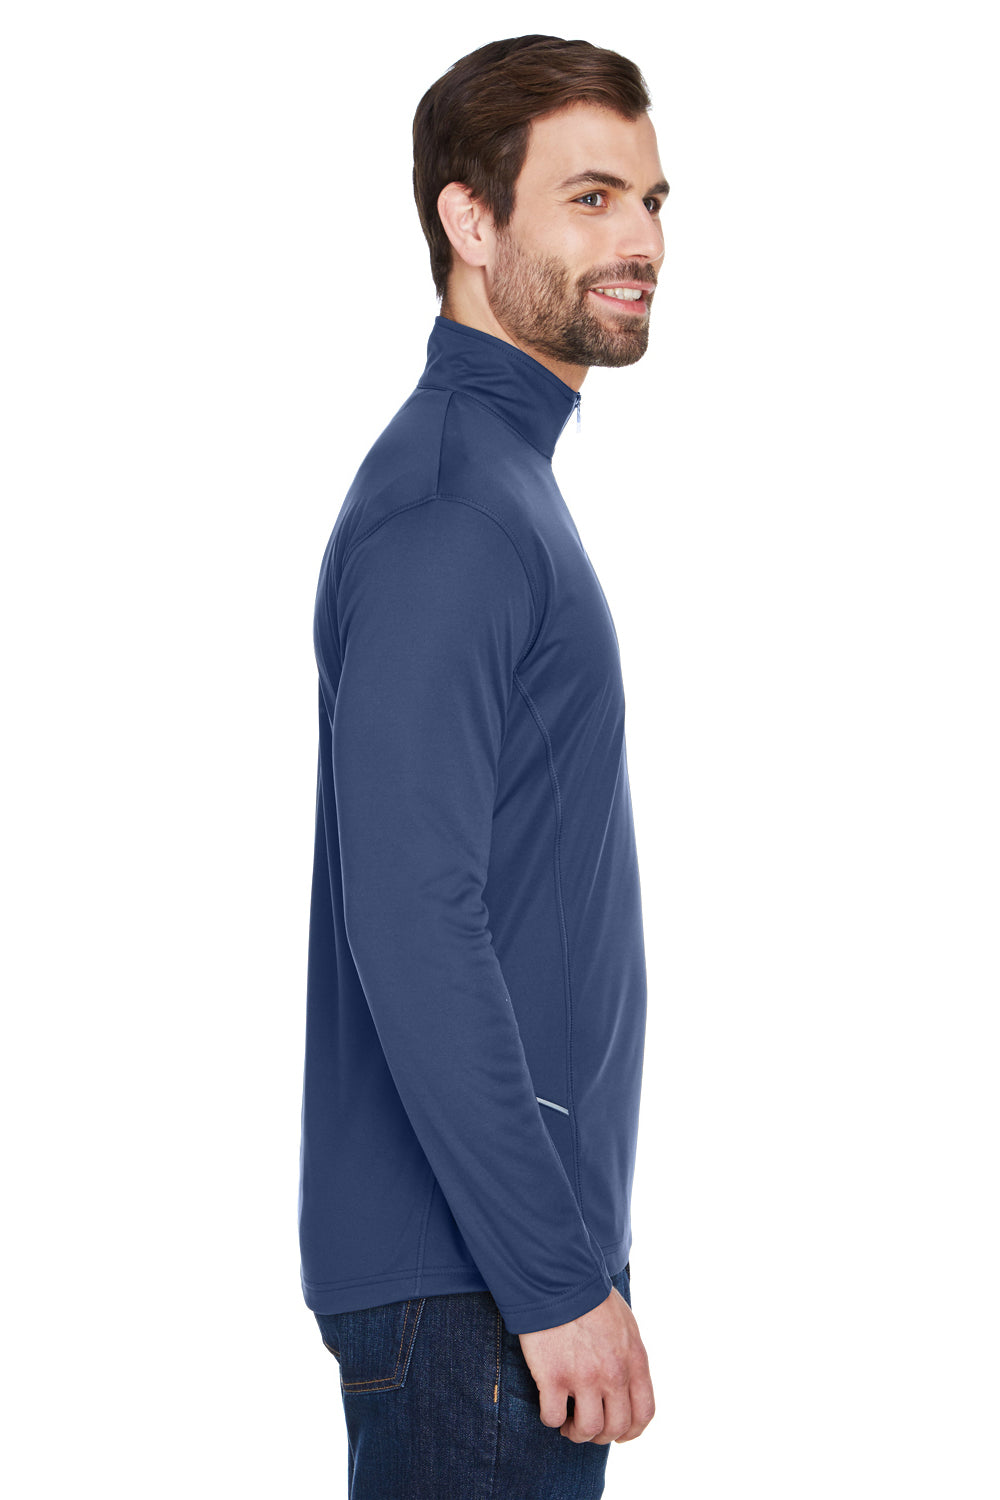 UltraClub 8230 Mens Cool & Dry Moisture Wicking 1/4 Zip Sweatshirt Navy Blue Side